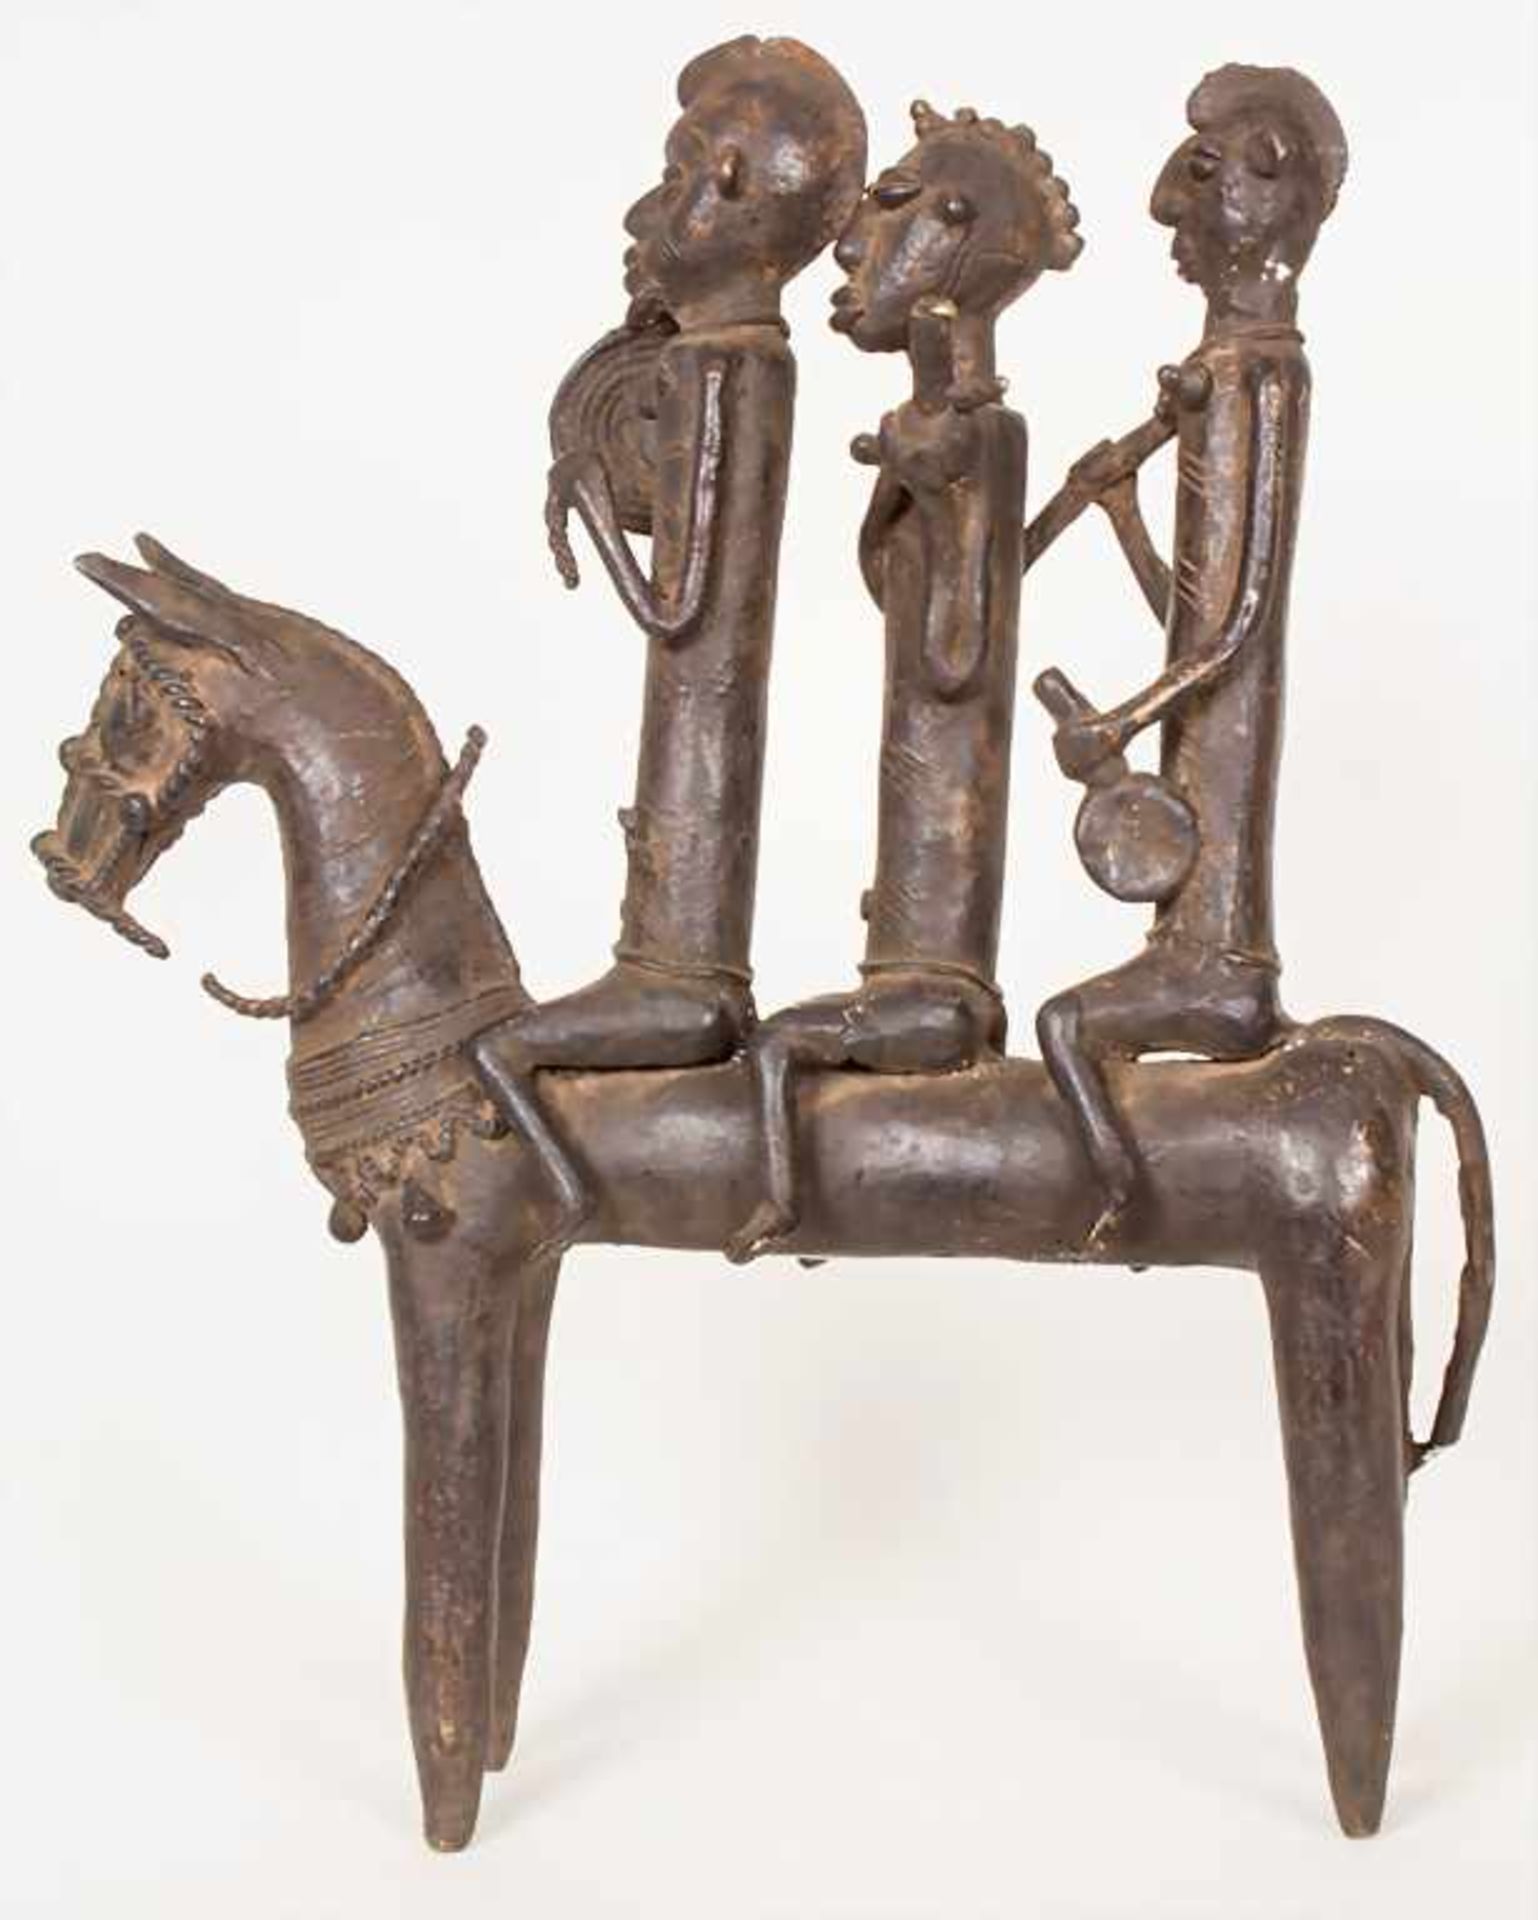 Reiterfigur, Kotoko, Tschad, 2. Hälfte 20. Jh.Material: Bronze, braun patiniert,Höhe: 45,5 cm,